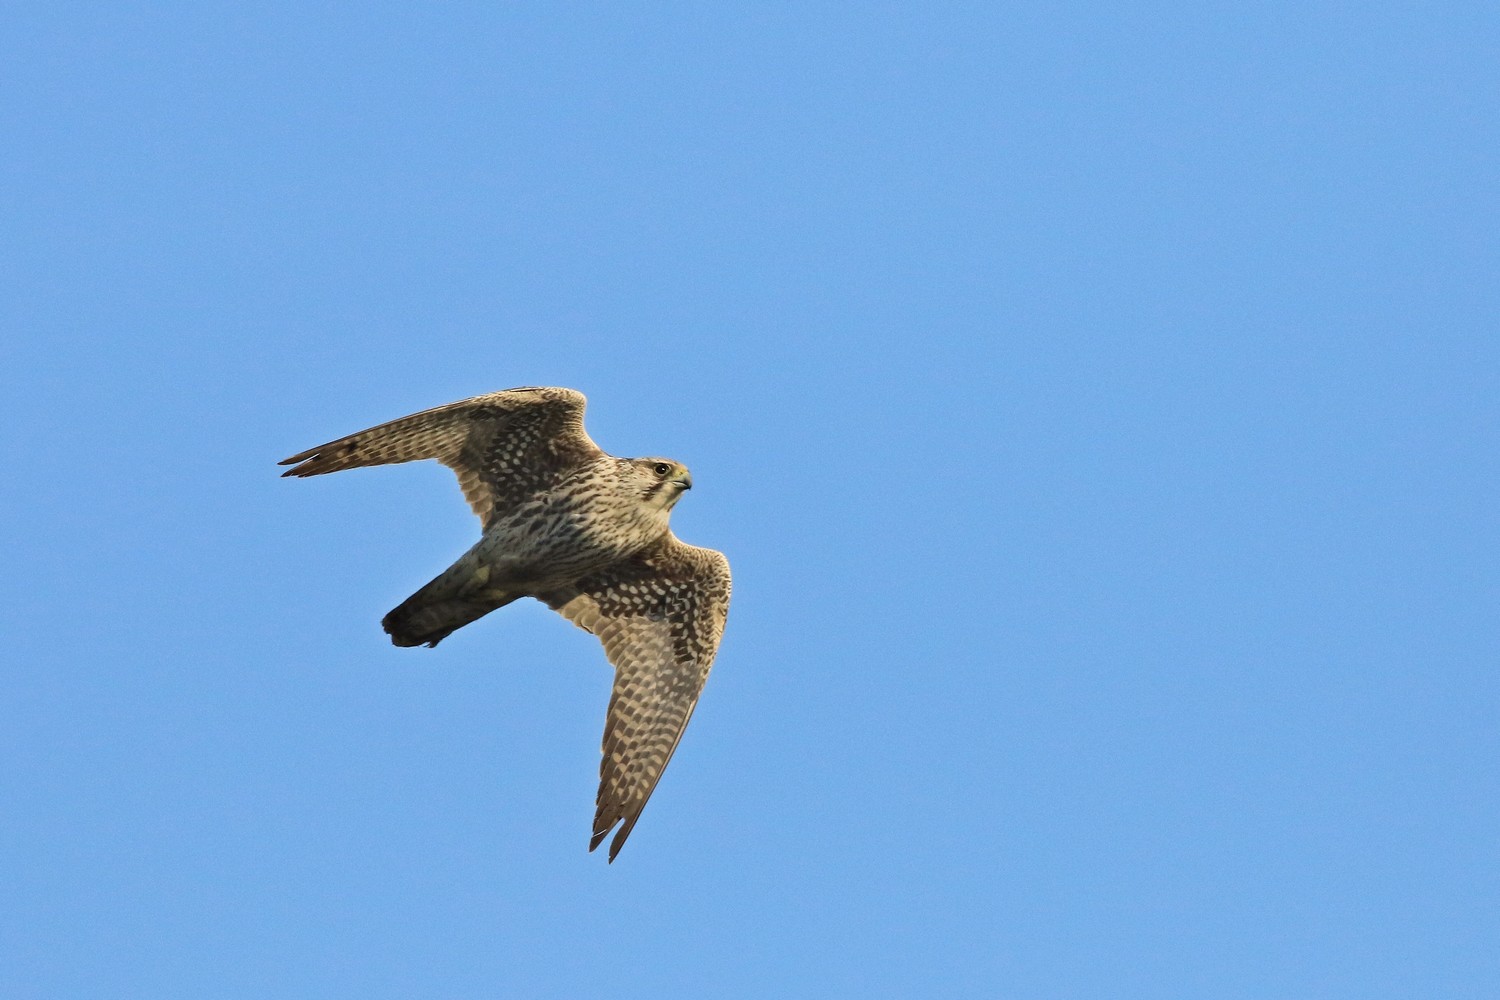 Falco pellegrino siberiano (Falco peregrinus calidus)